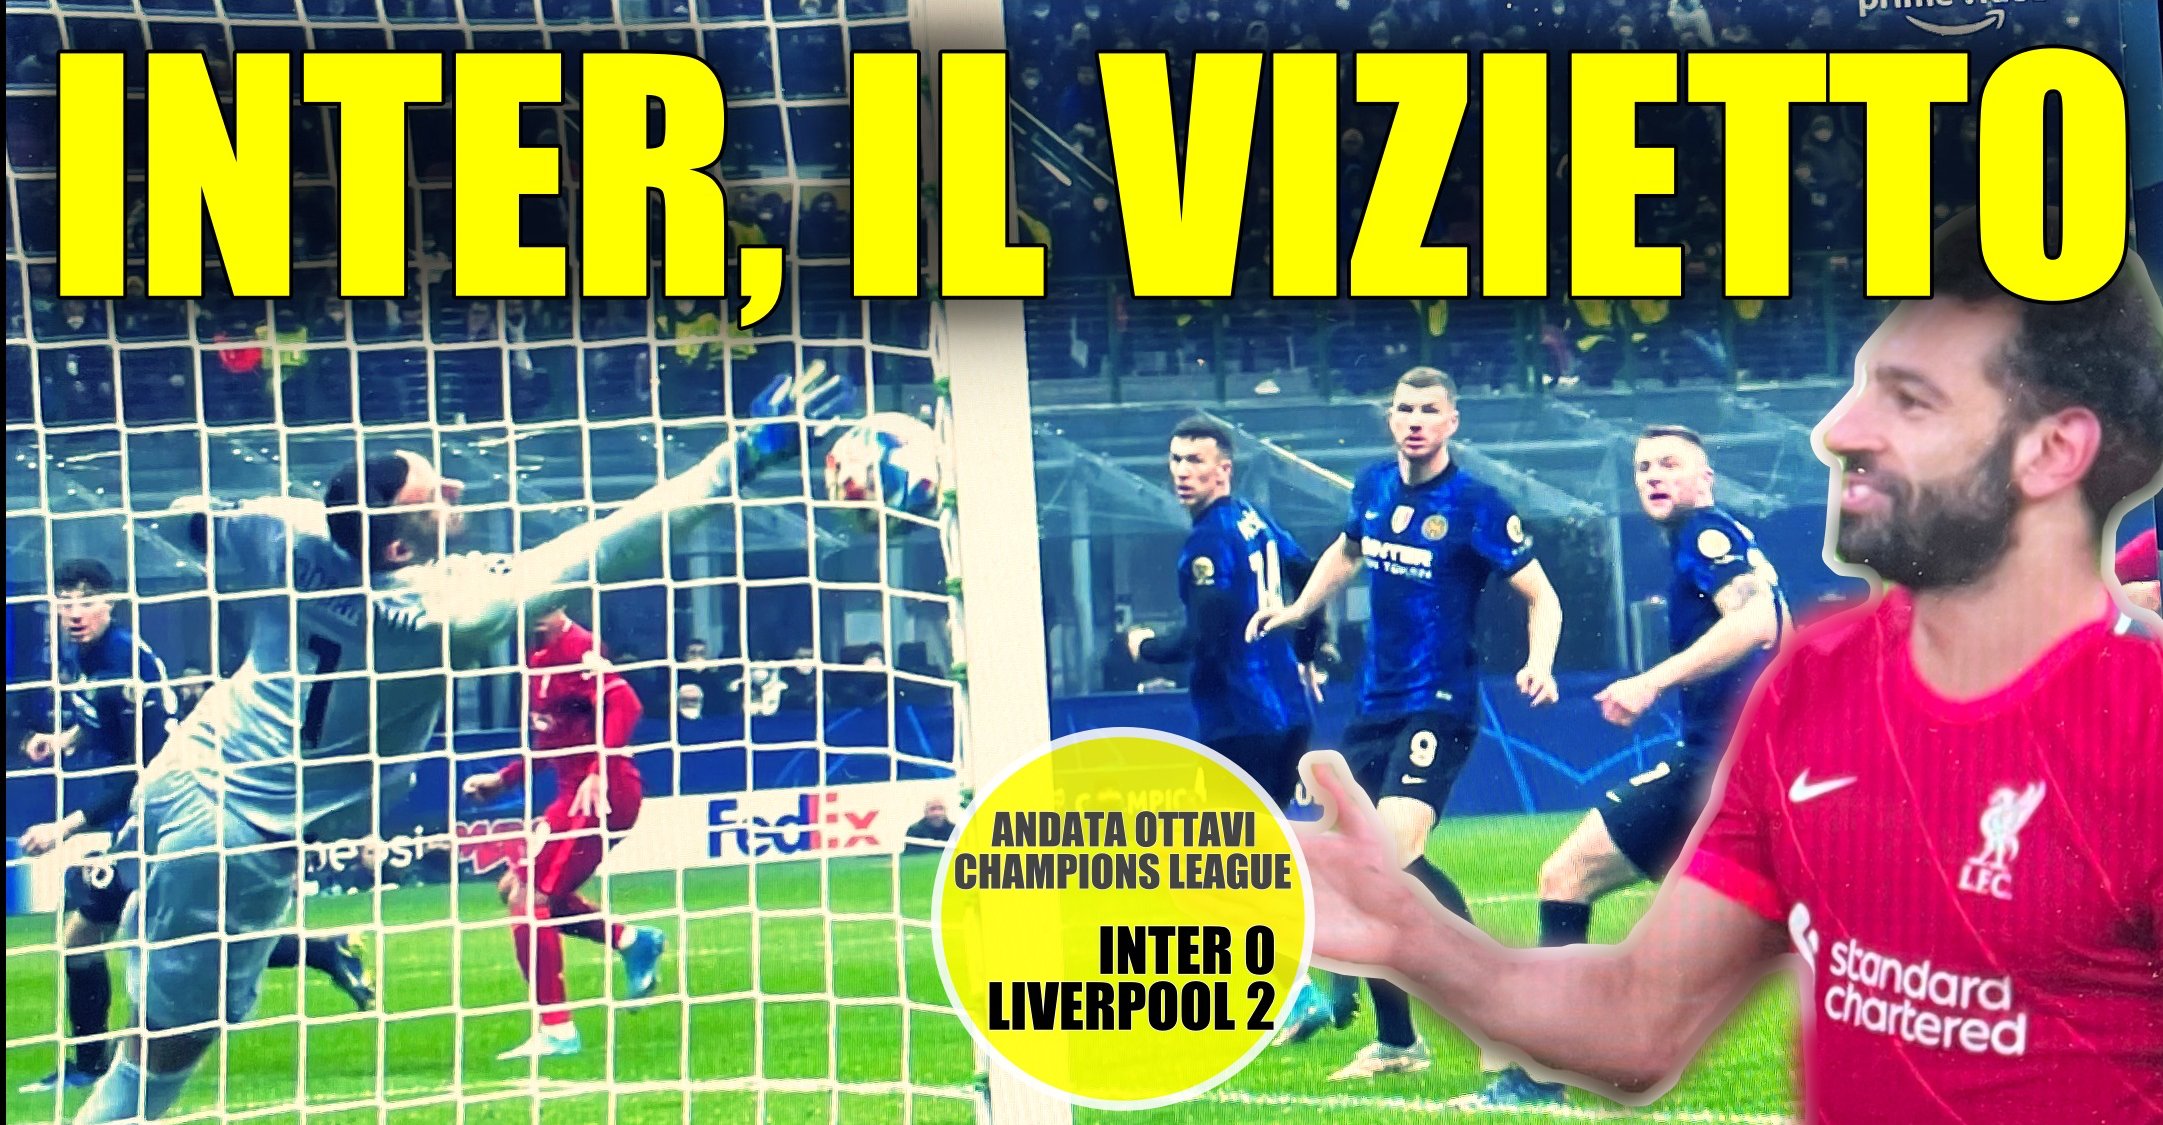 Inter - Liverpool 0-2, andata ottavi Champions League a San Siro